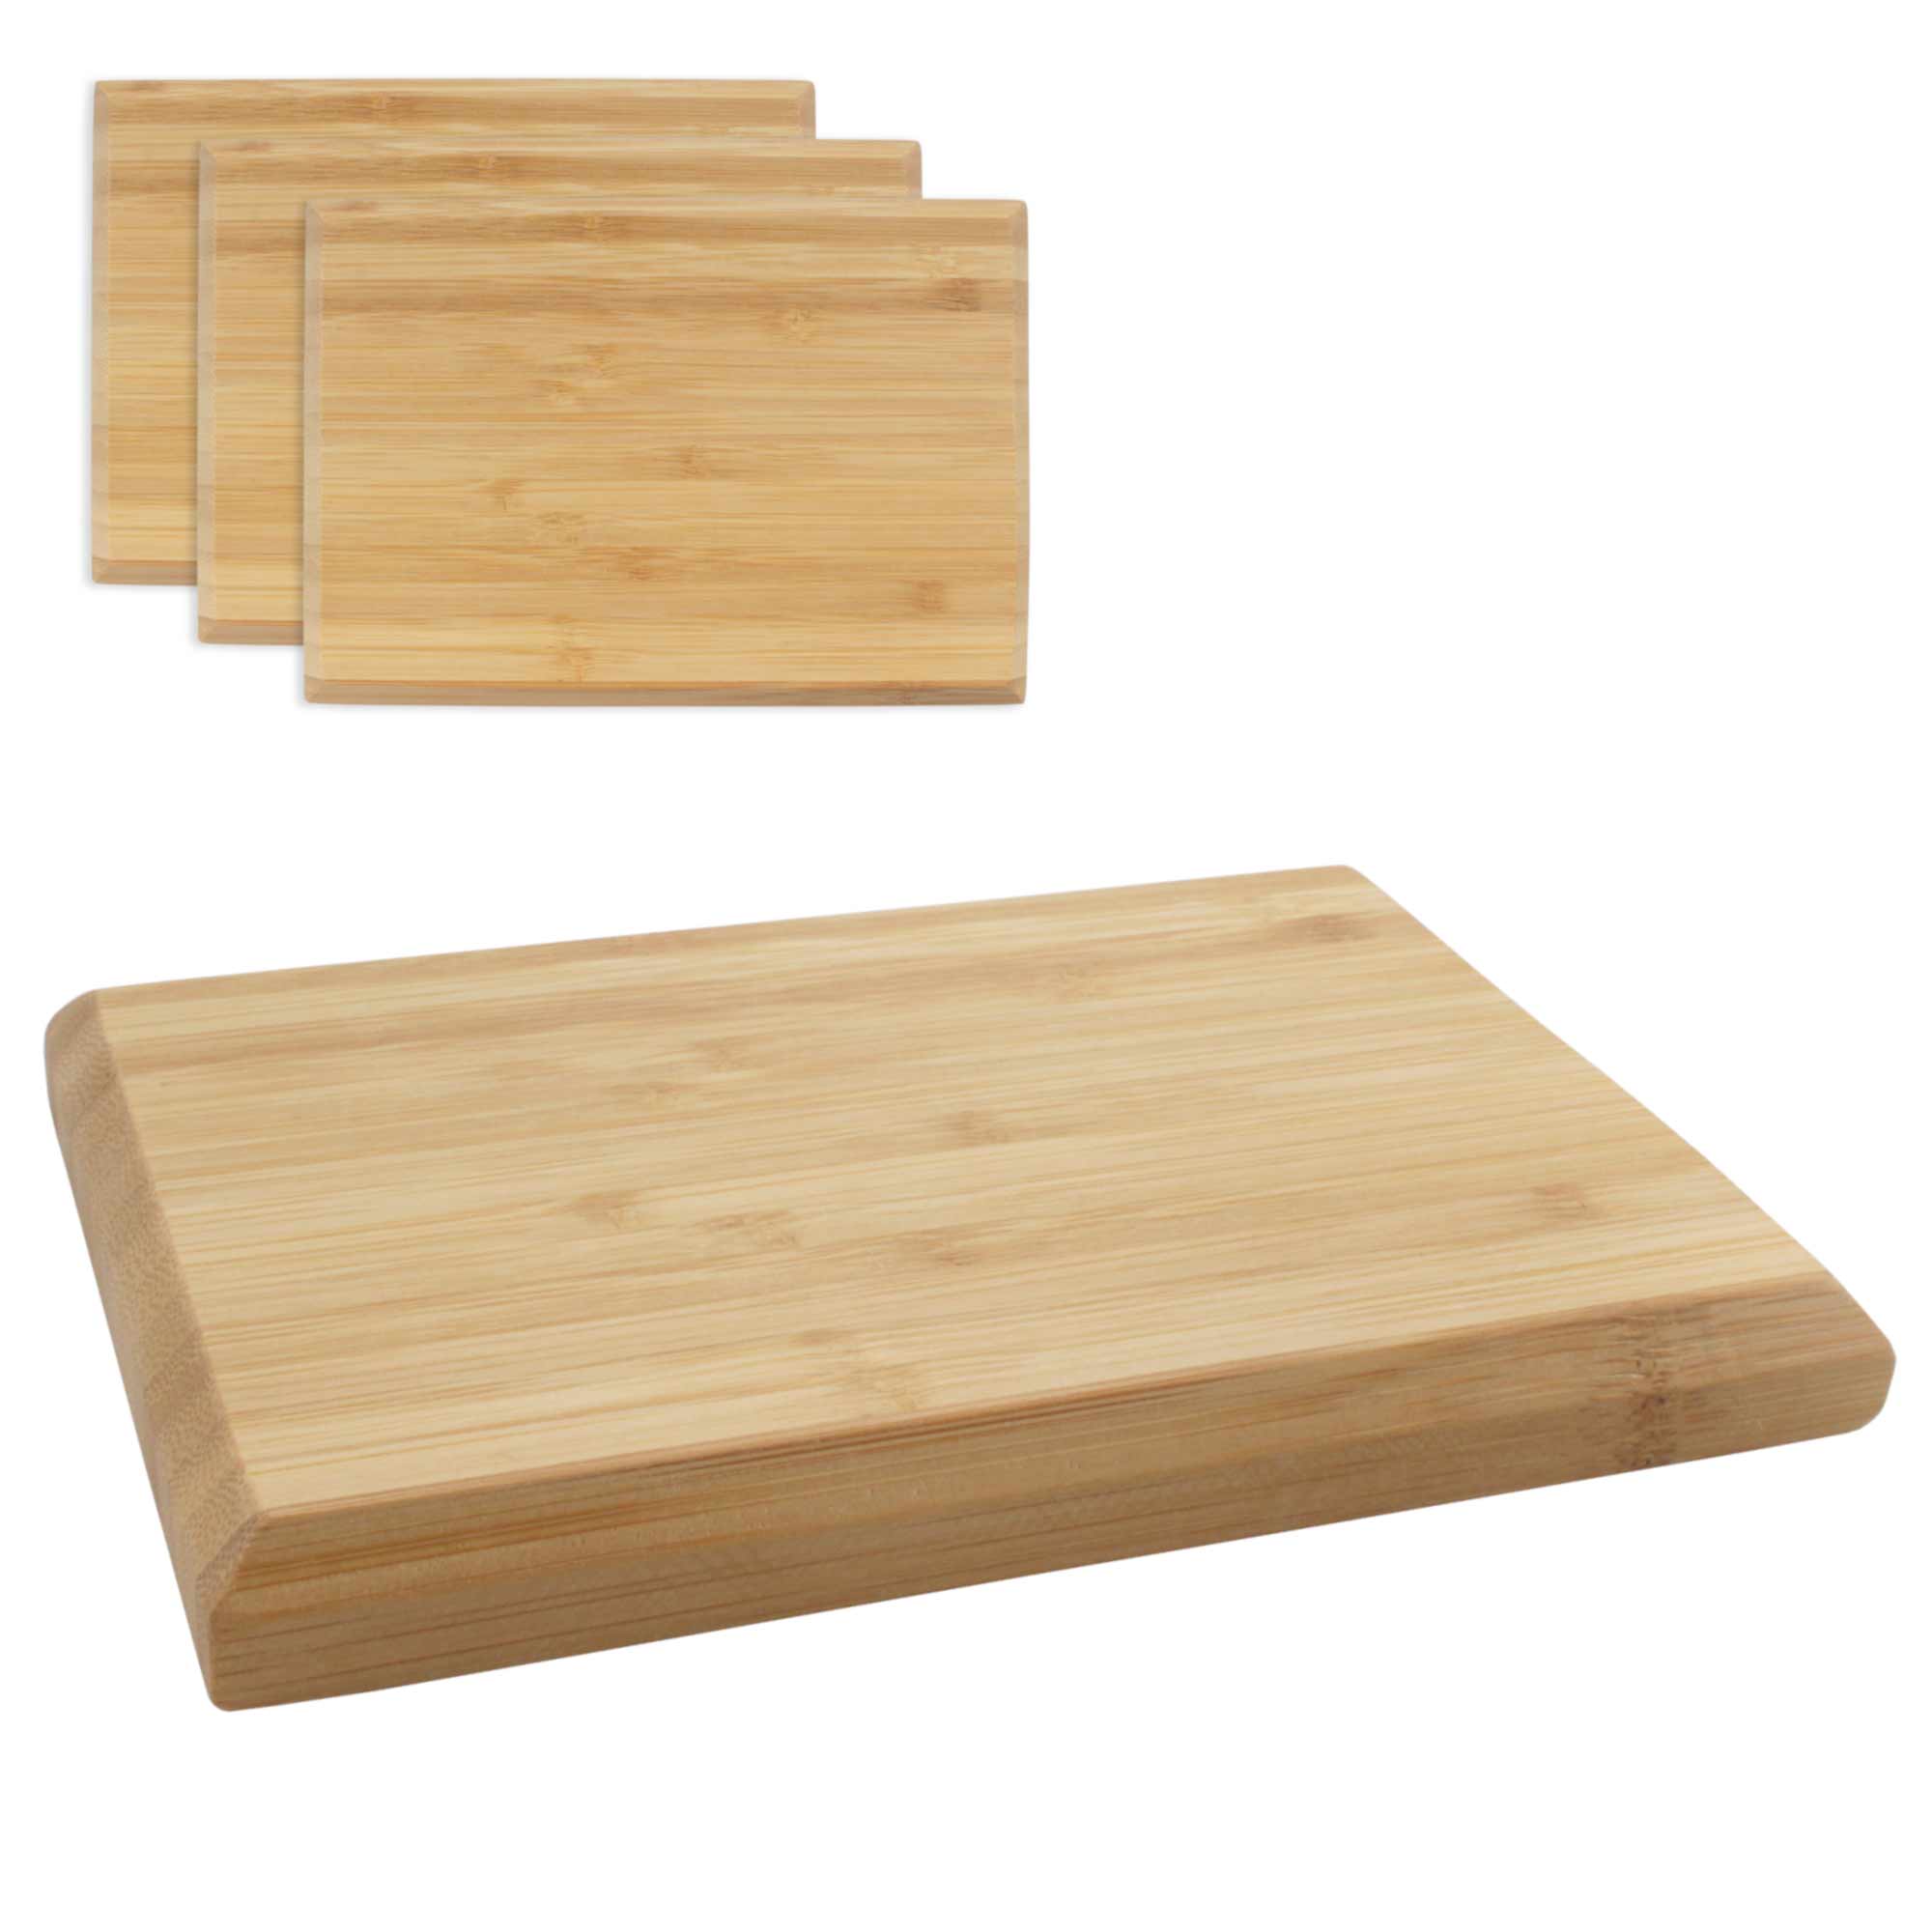 Thin Bamboo Cutting Board 13 x 9 x 0.4